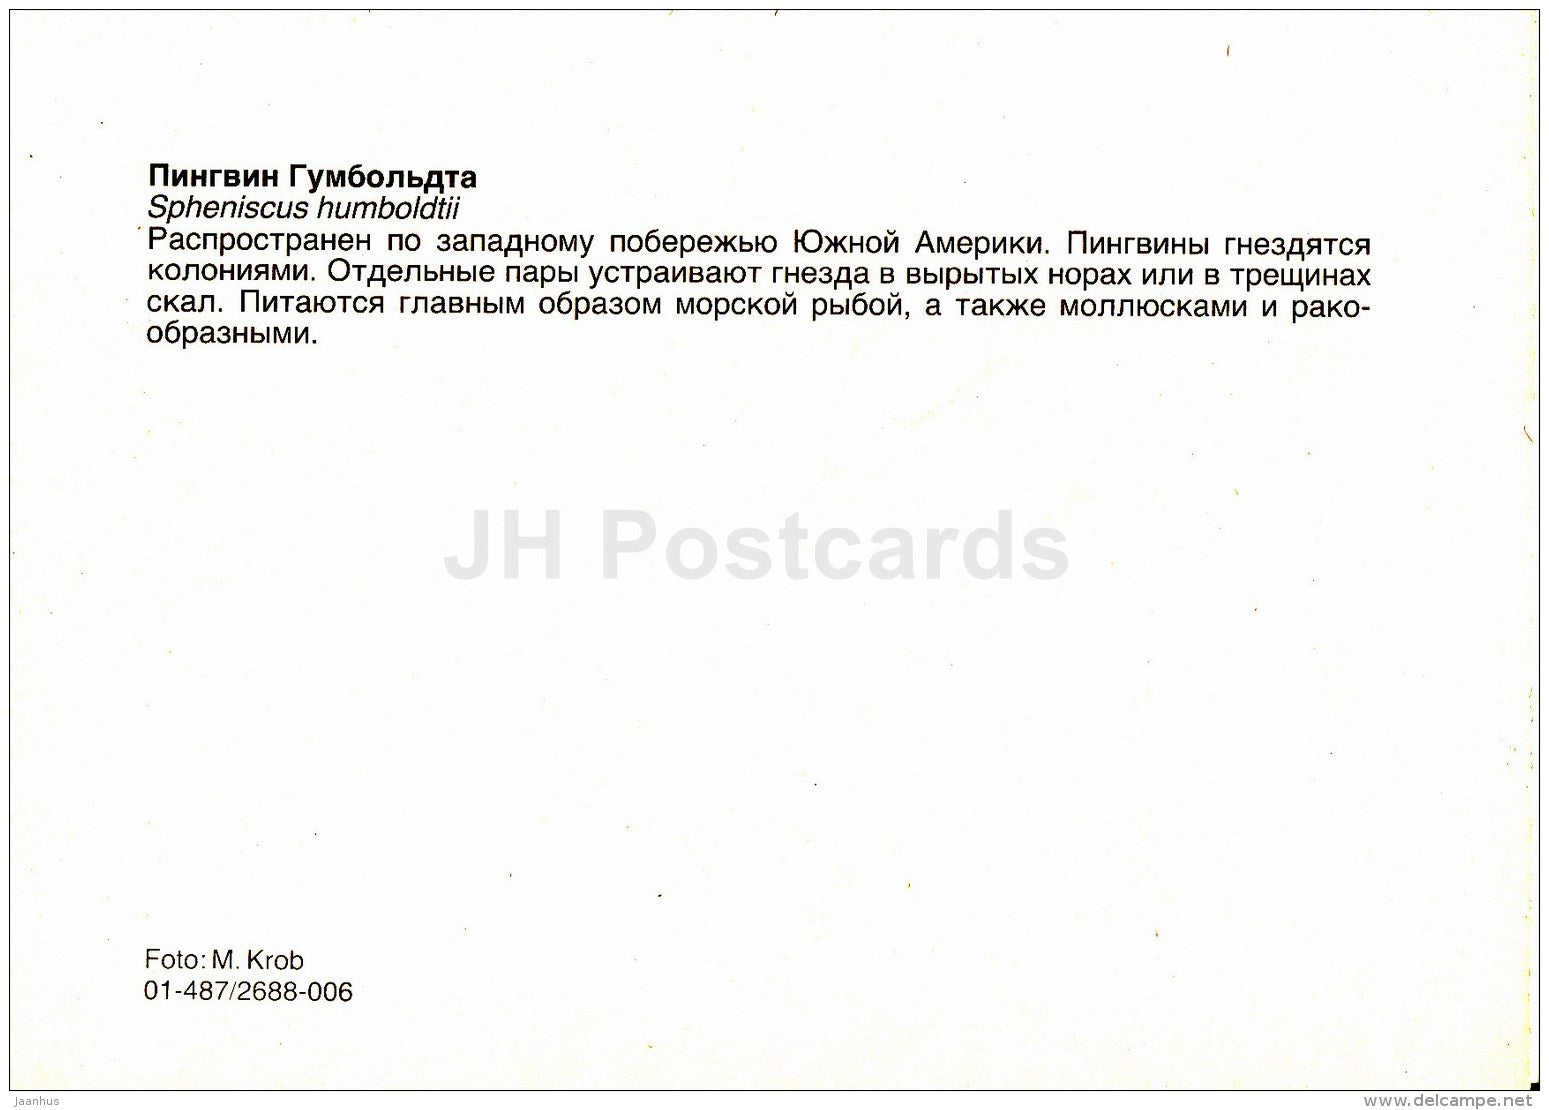 Humboldt penguin - Spheniscus humboldti - birds - Zoo - Czechoslovakia - unused - JH Postcards